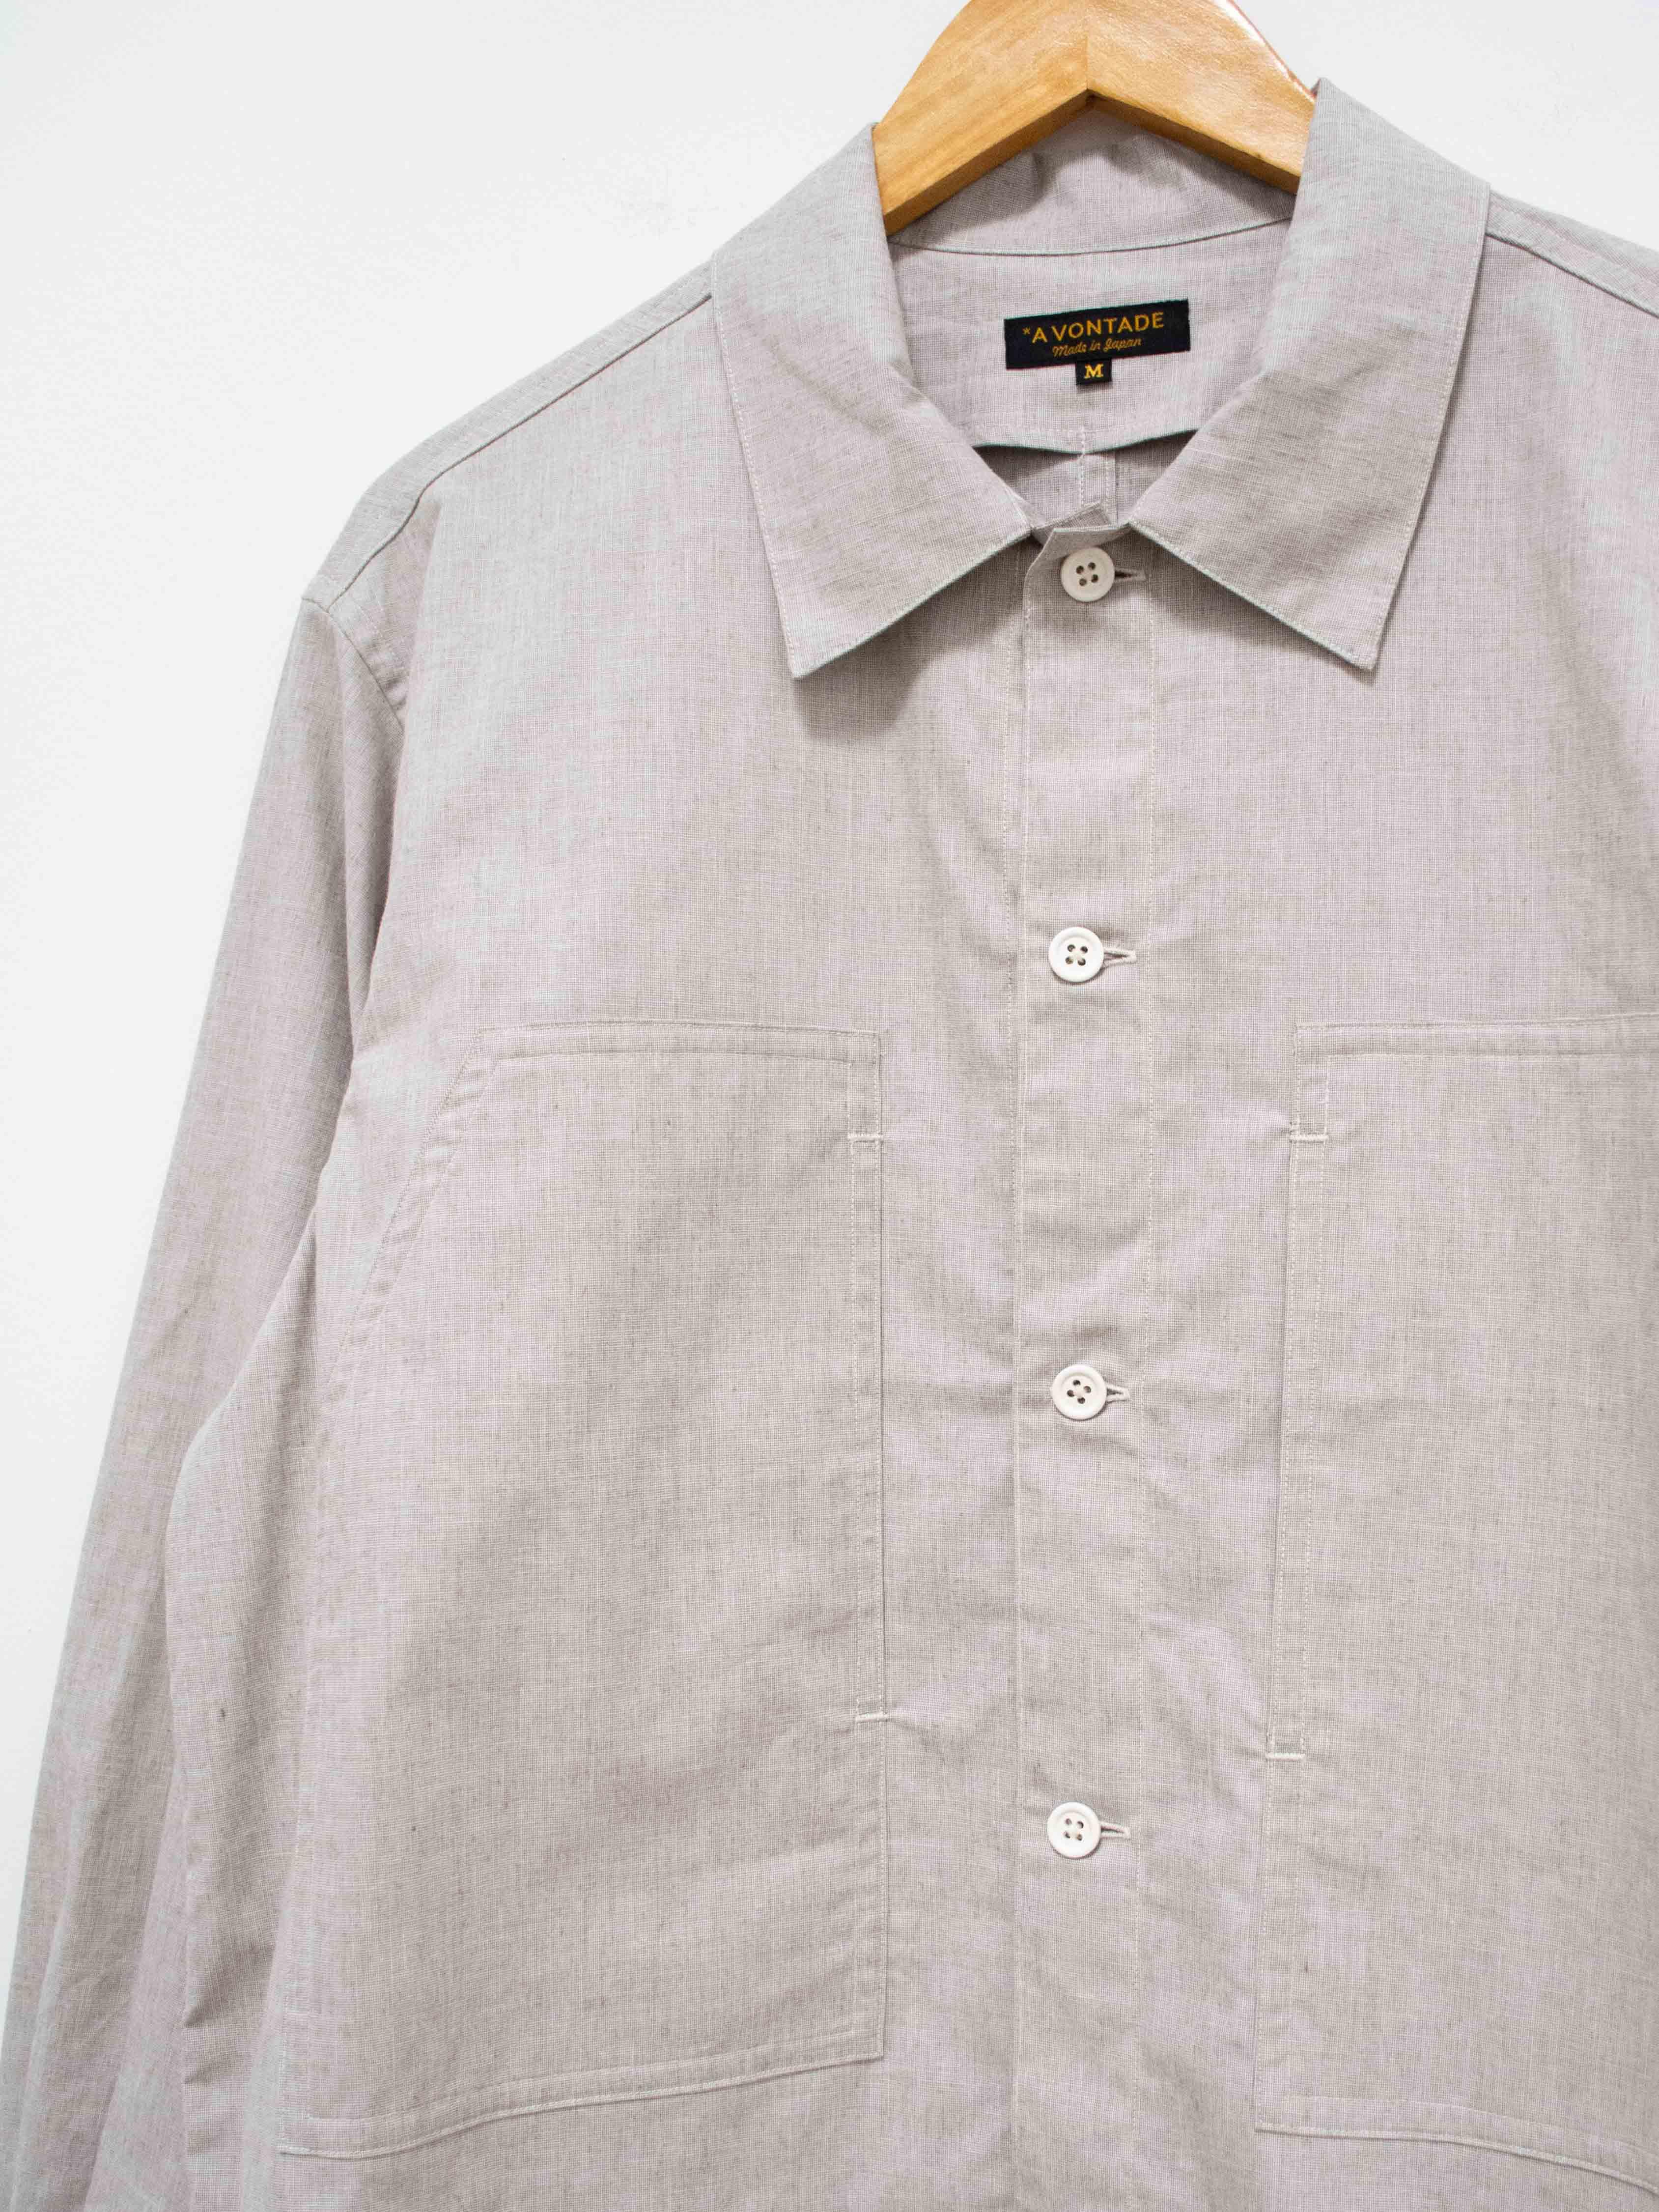 Namu Shop - A Vontade Peachskin Shirt Jacket - Light Gray